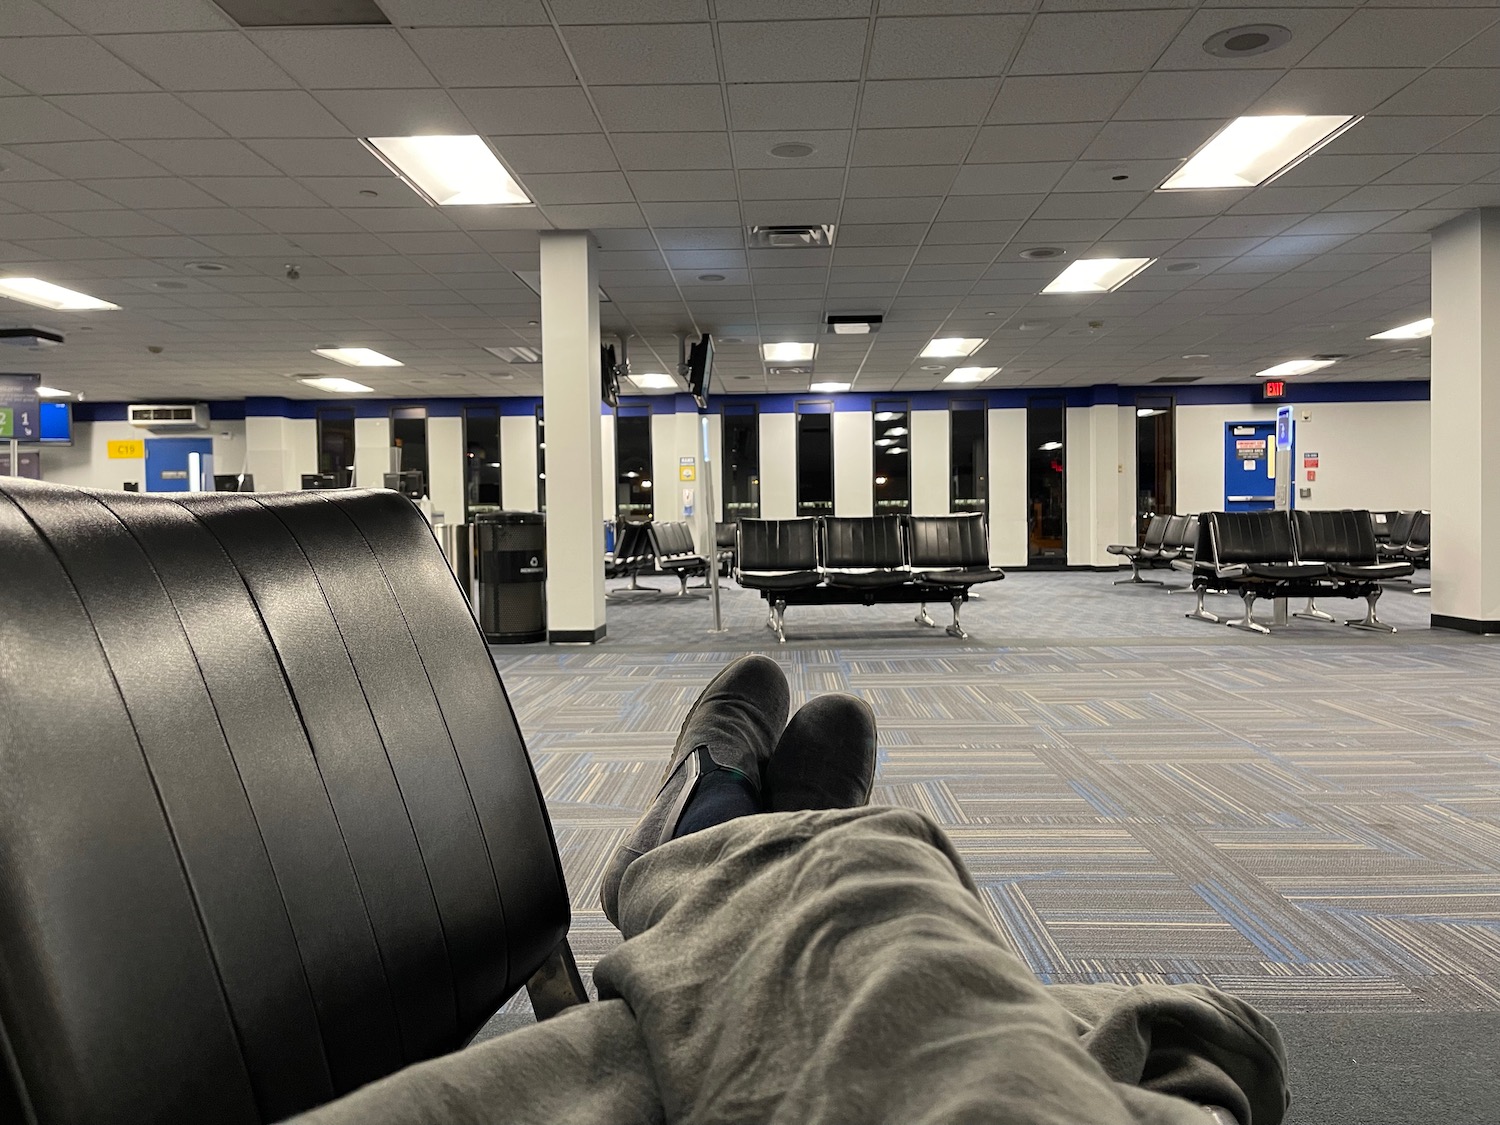 a person's legs in a chair in an airport terminal